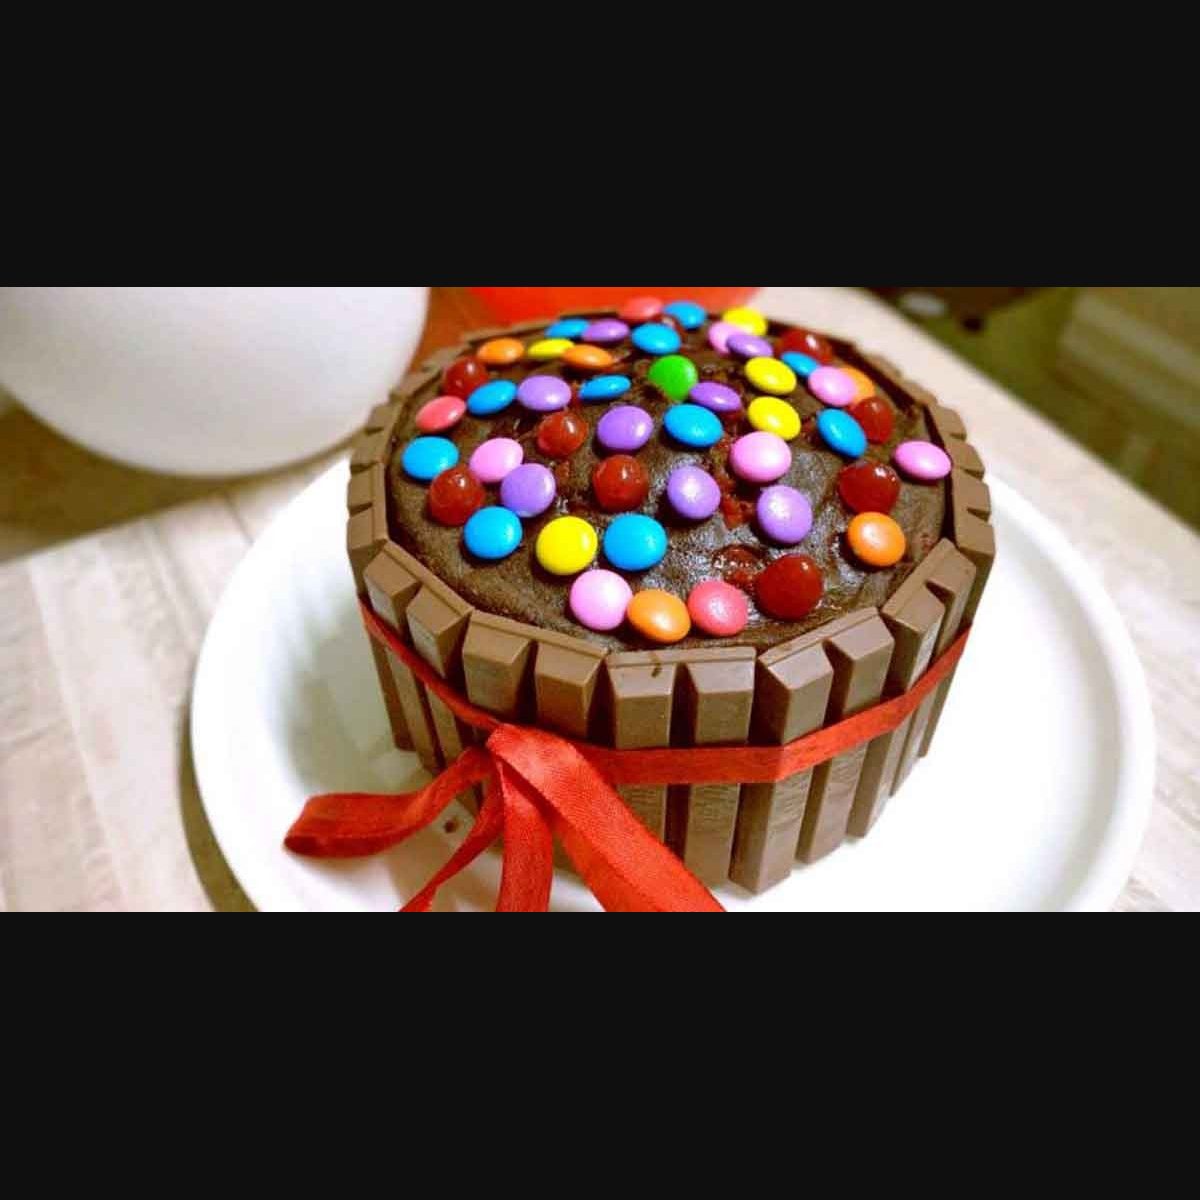 26 Cricket cake ideas | cricket cake, cricket birthday cake, cake